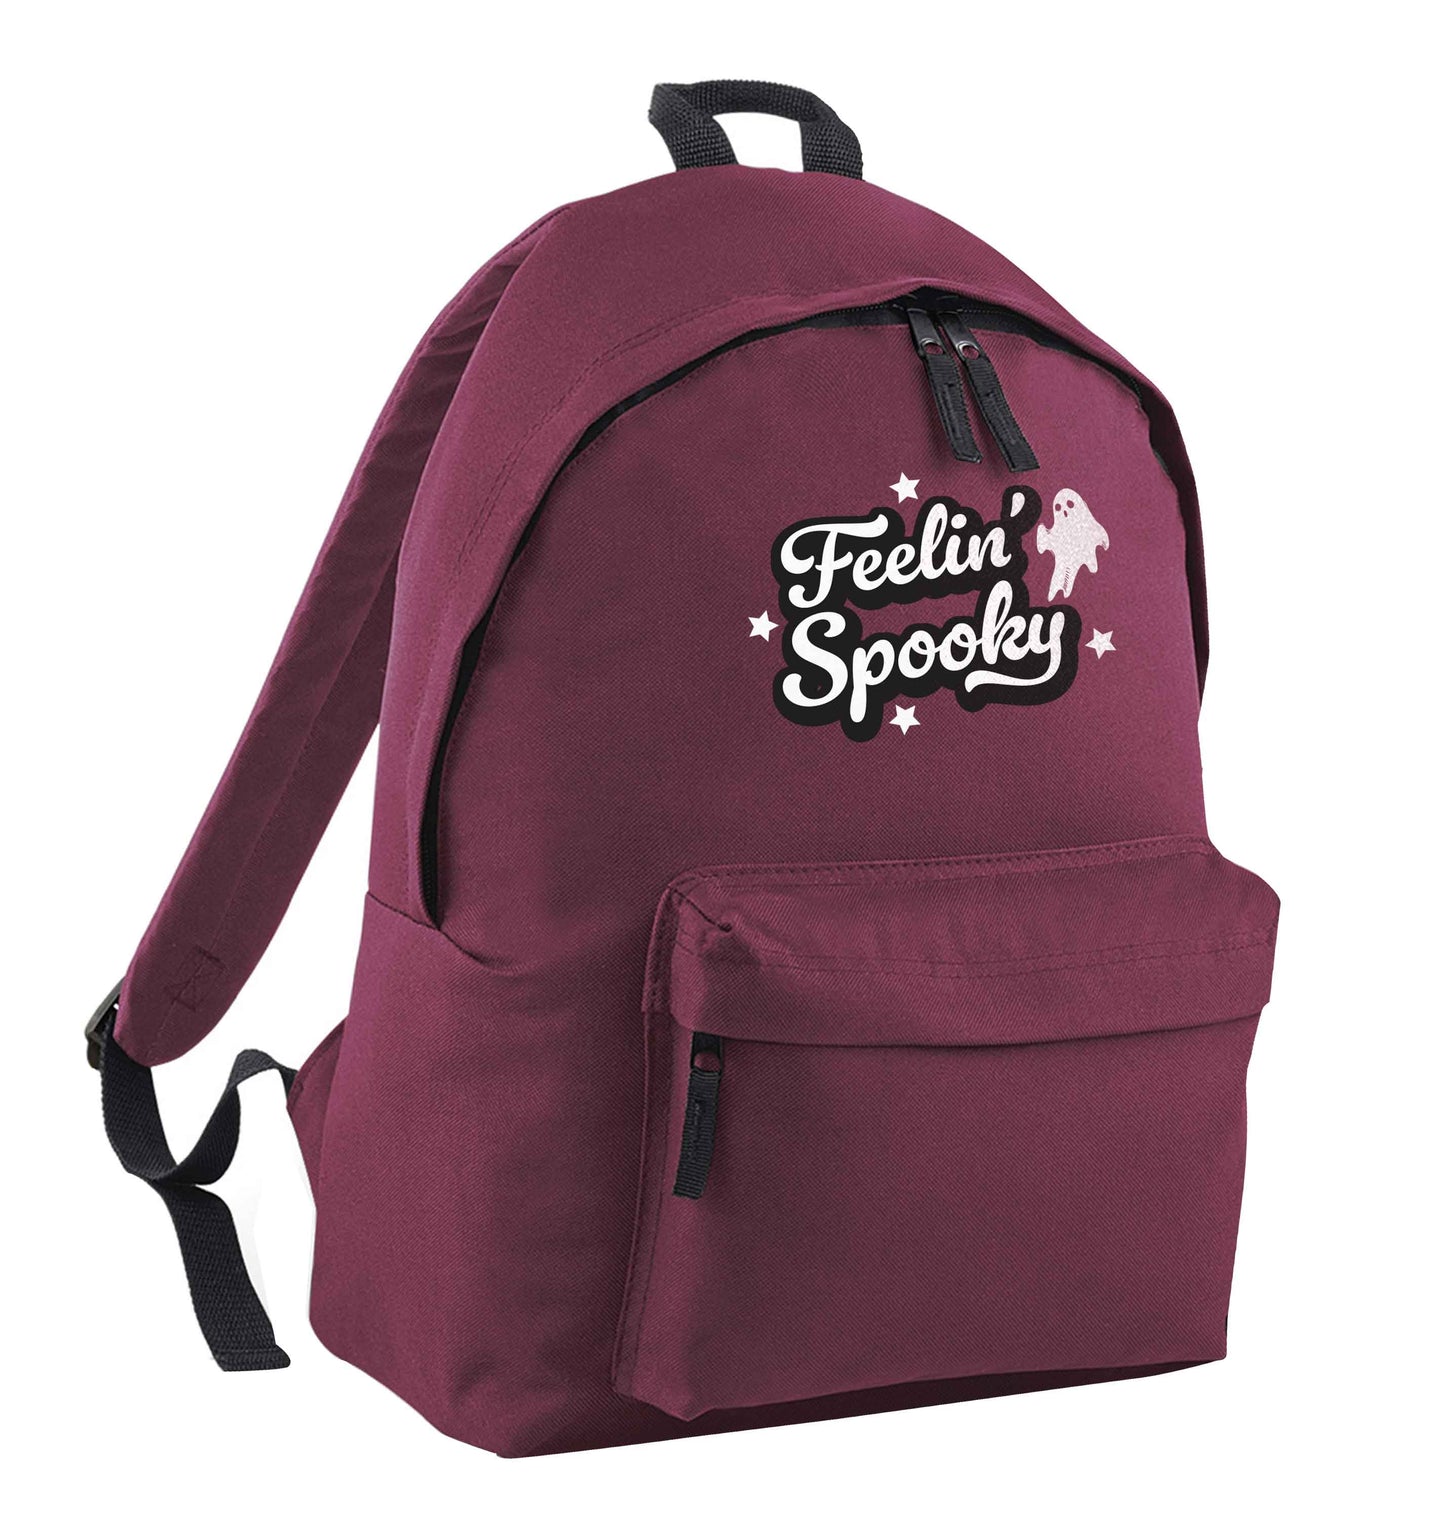 Feelin' Spooky Kit maroon children's backpack